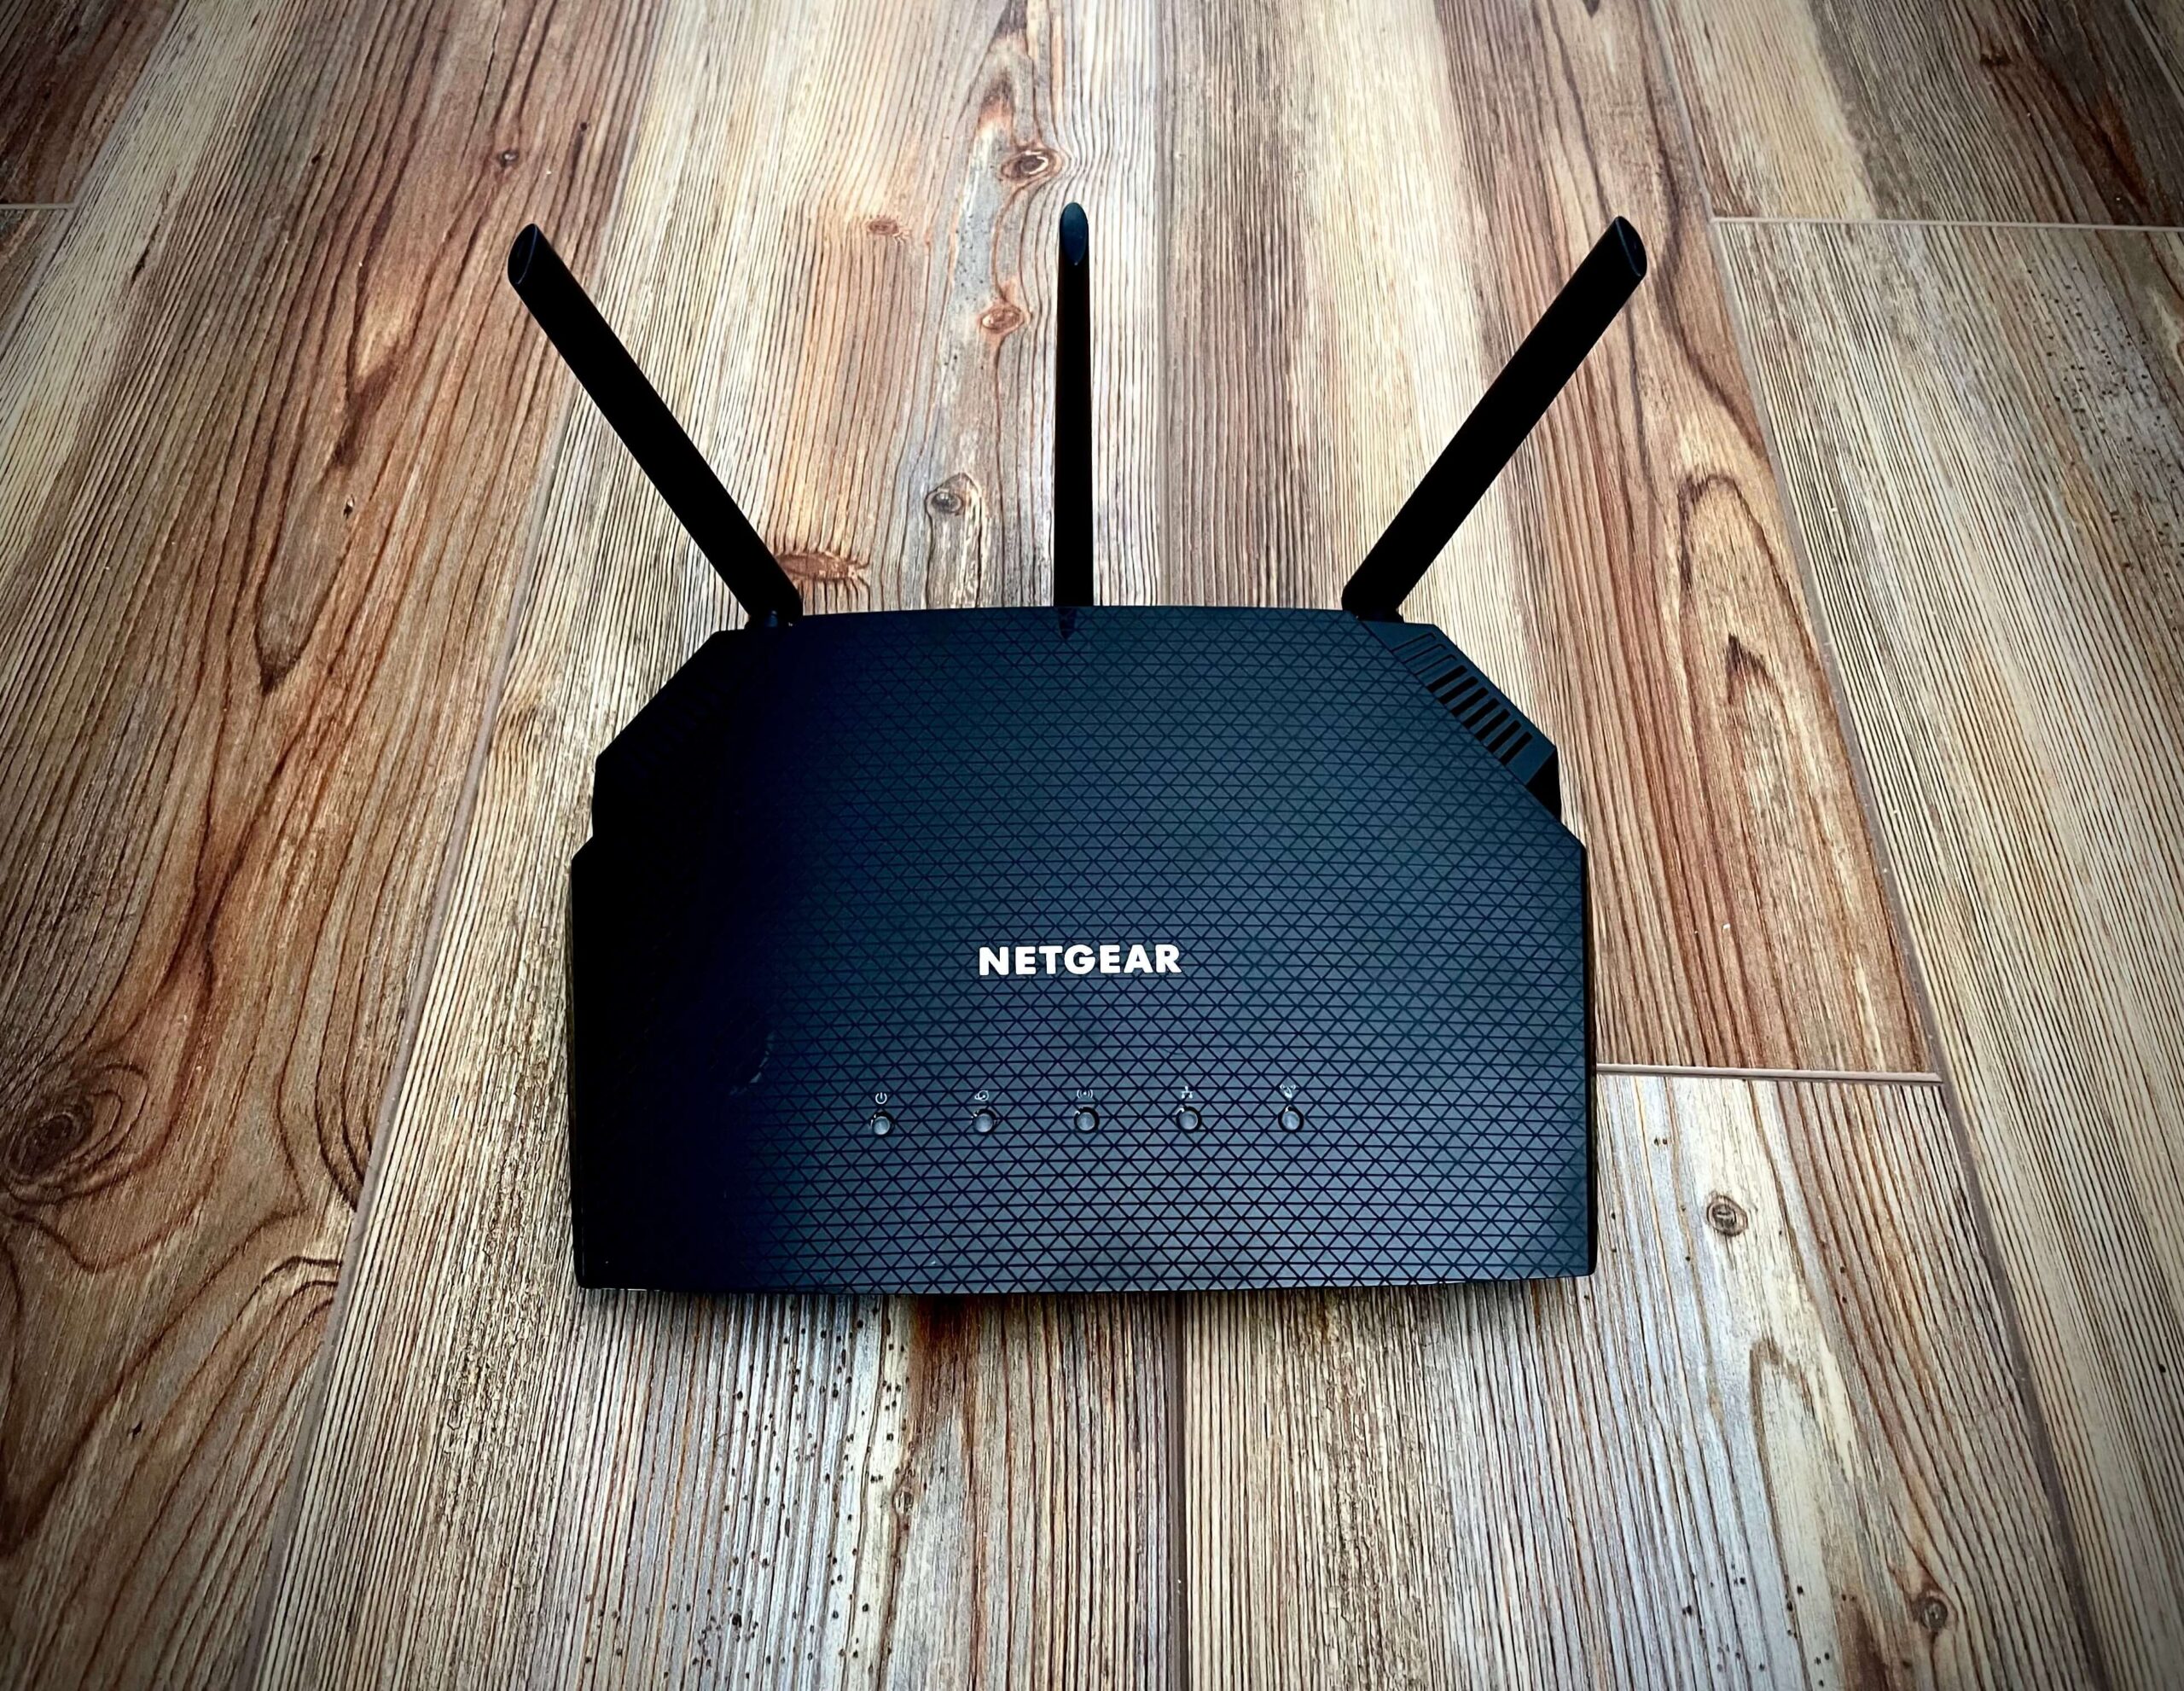 Netgear Router Keeps Disconnecting